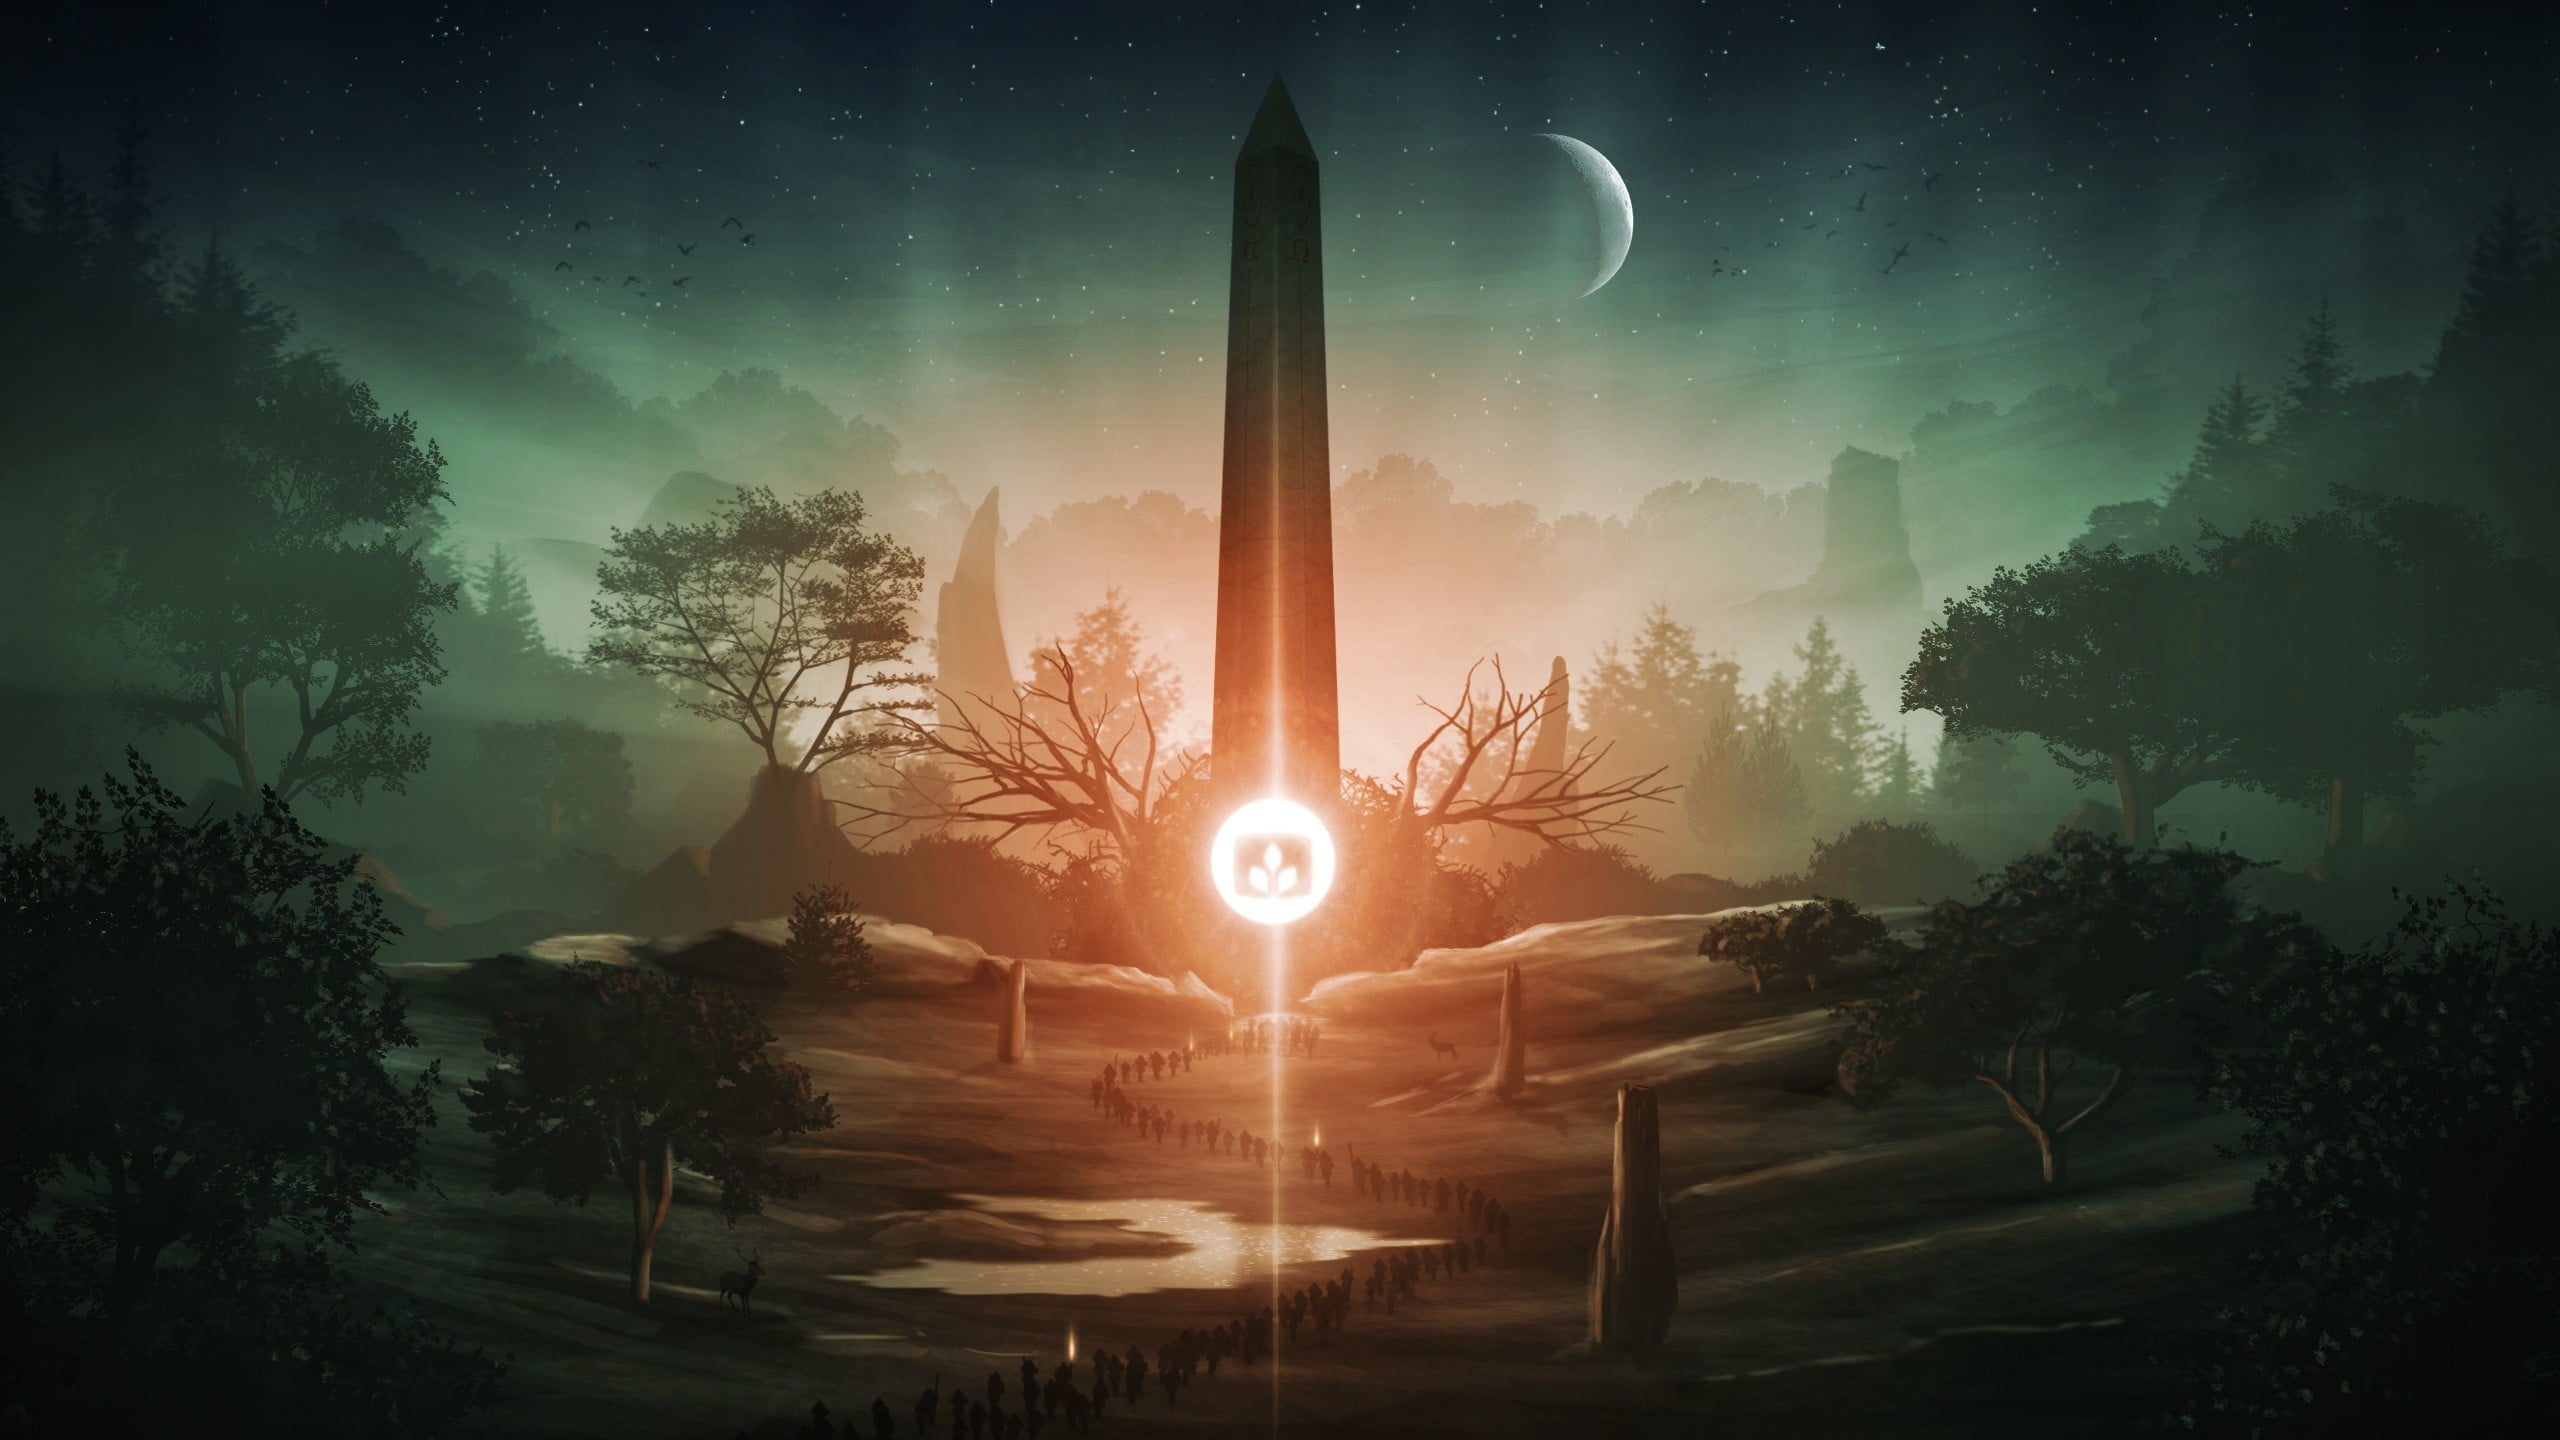 crescent moon illustration, Desktopography, fantasy art, Obelisk